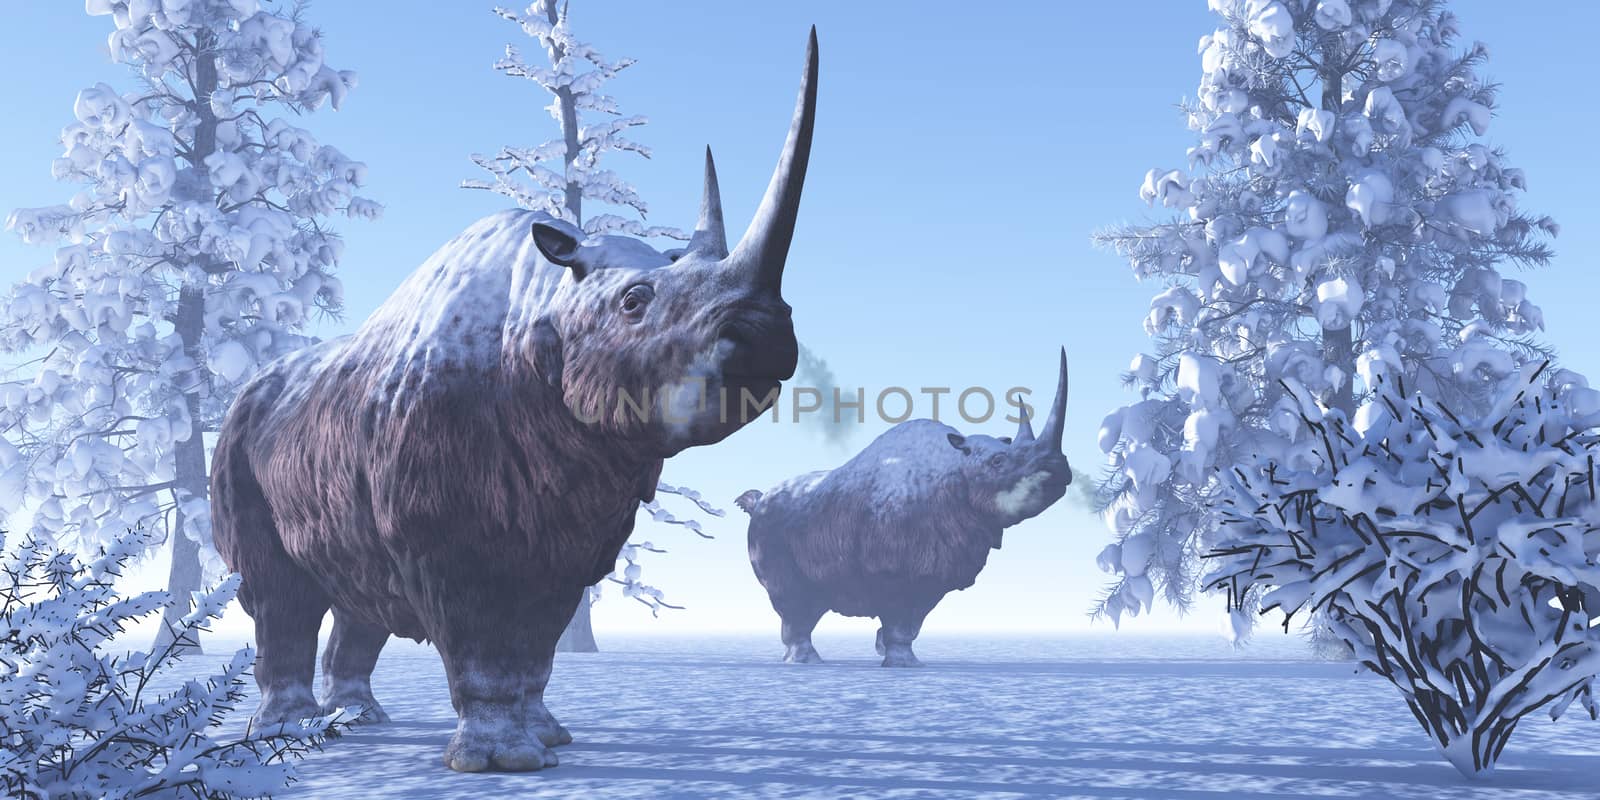 Woolly Rhino by Catmando